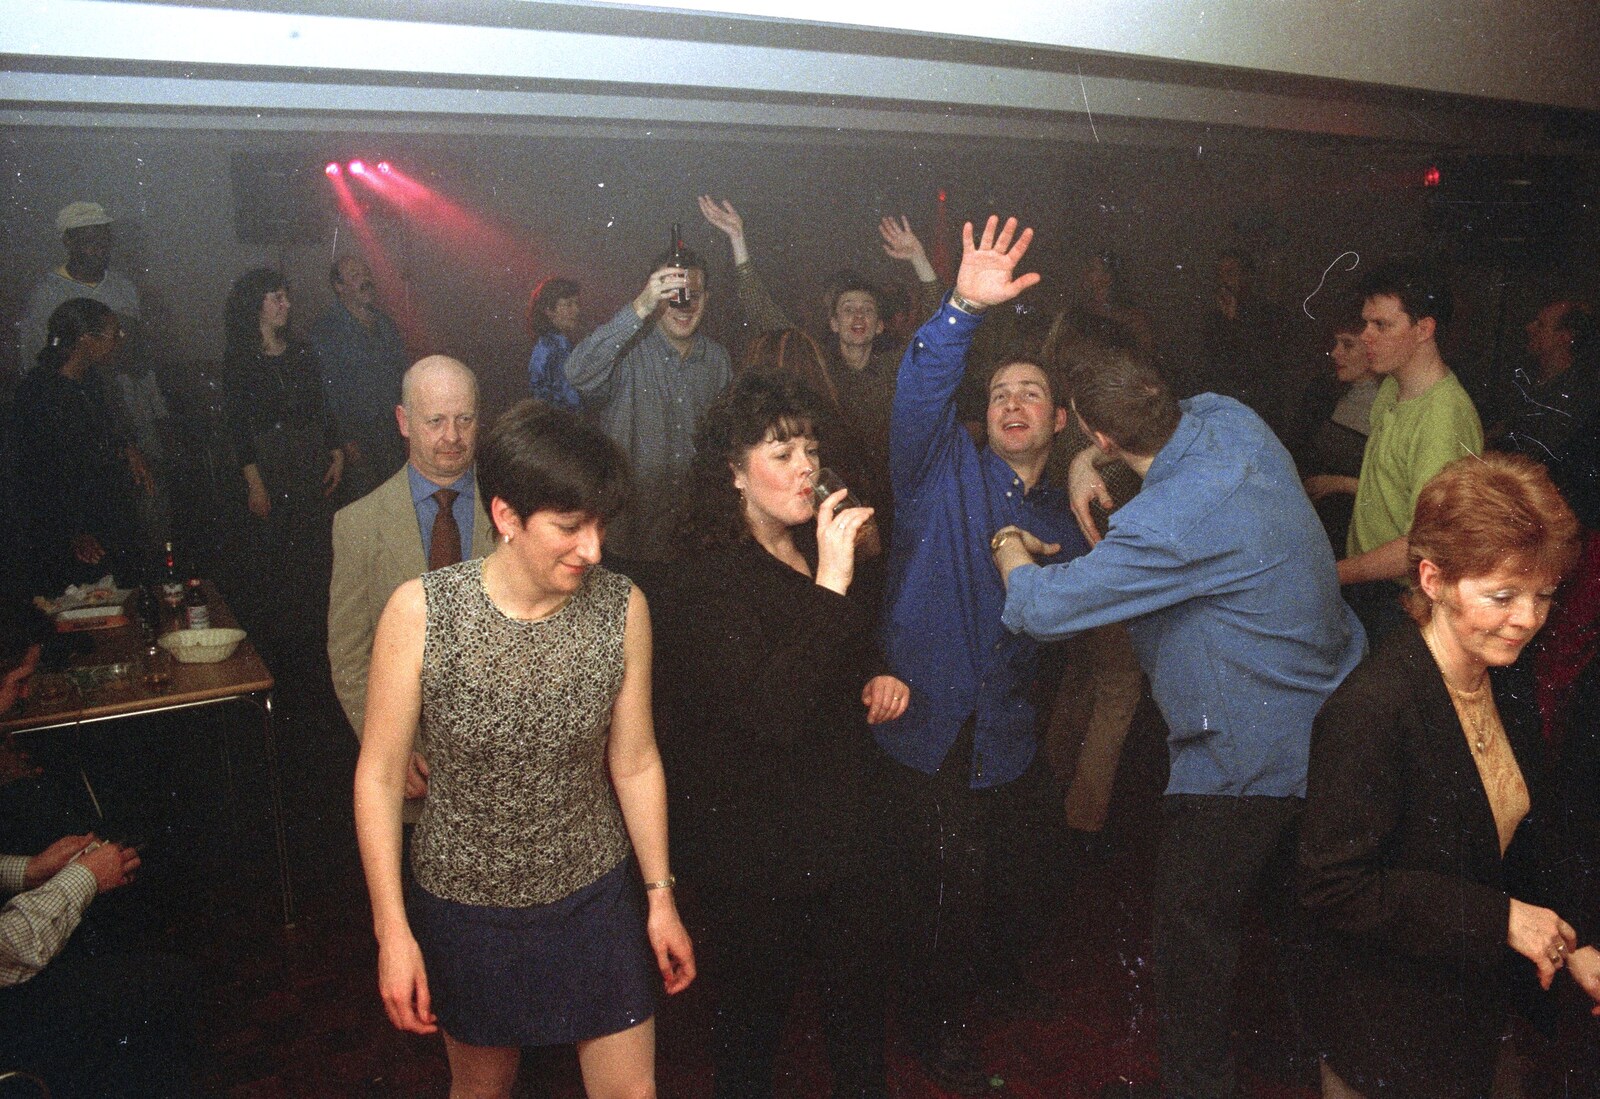 More CISU hand waving from A CISU Thrash in the SCC Social Club, Rope Walk, Ipswich - 4th April 1998